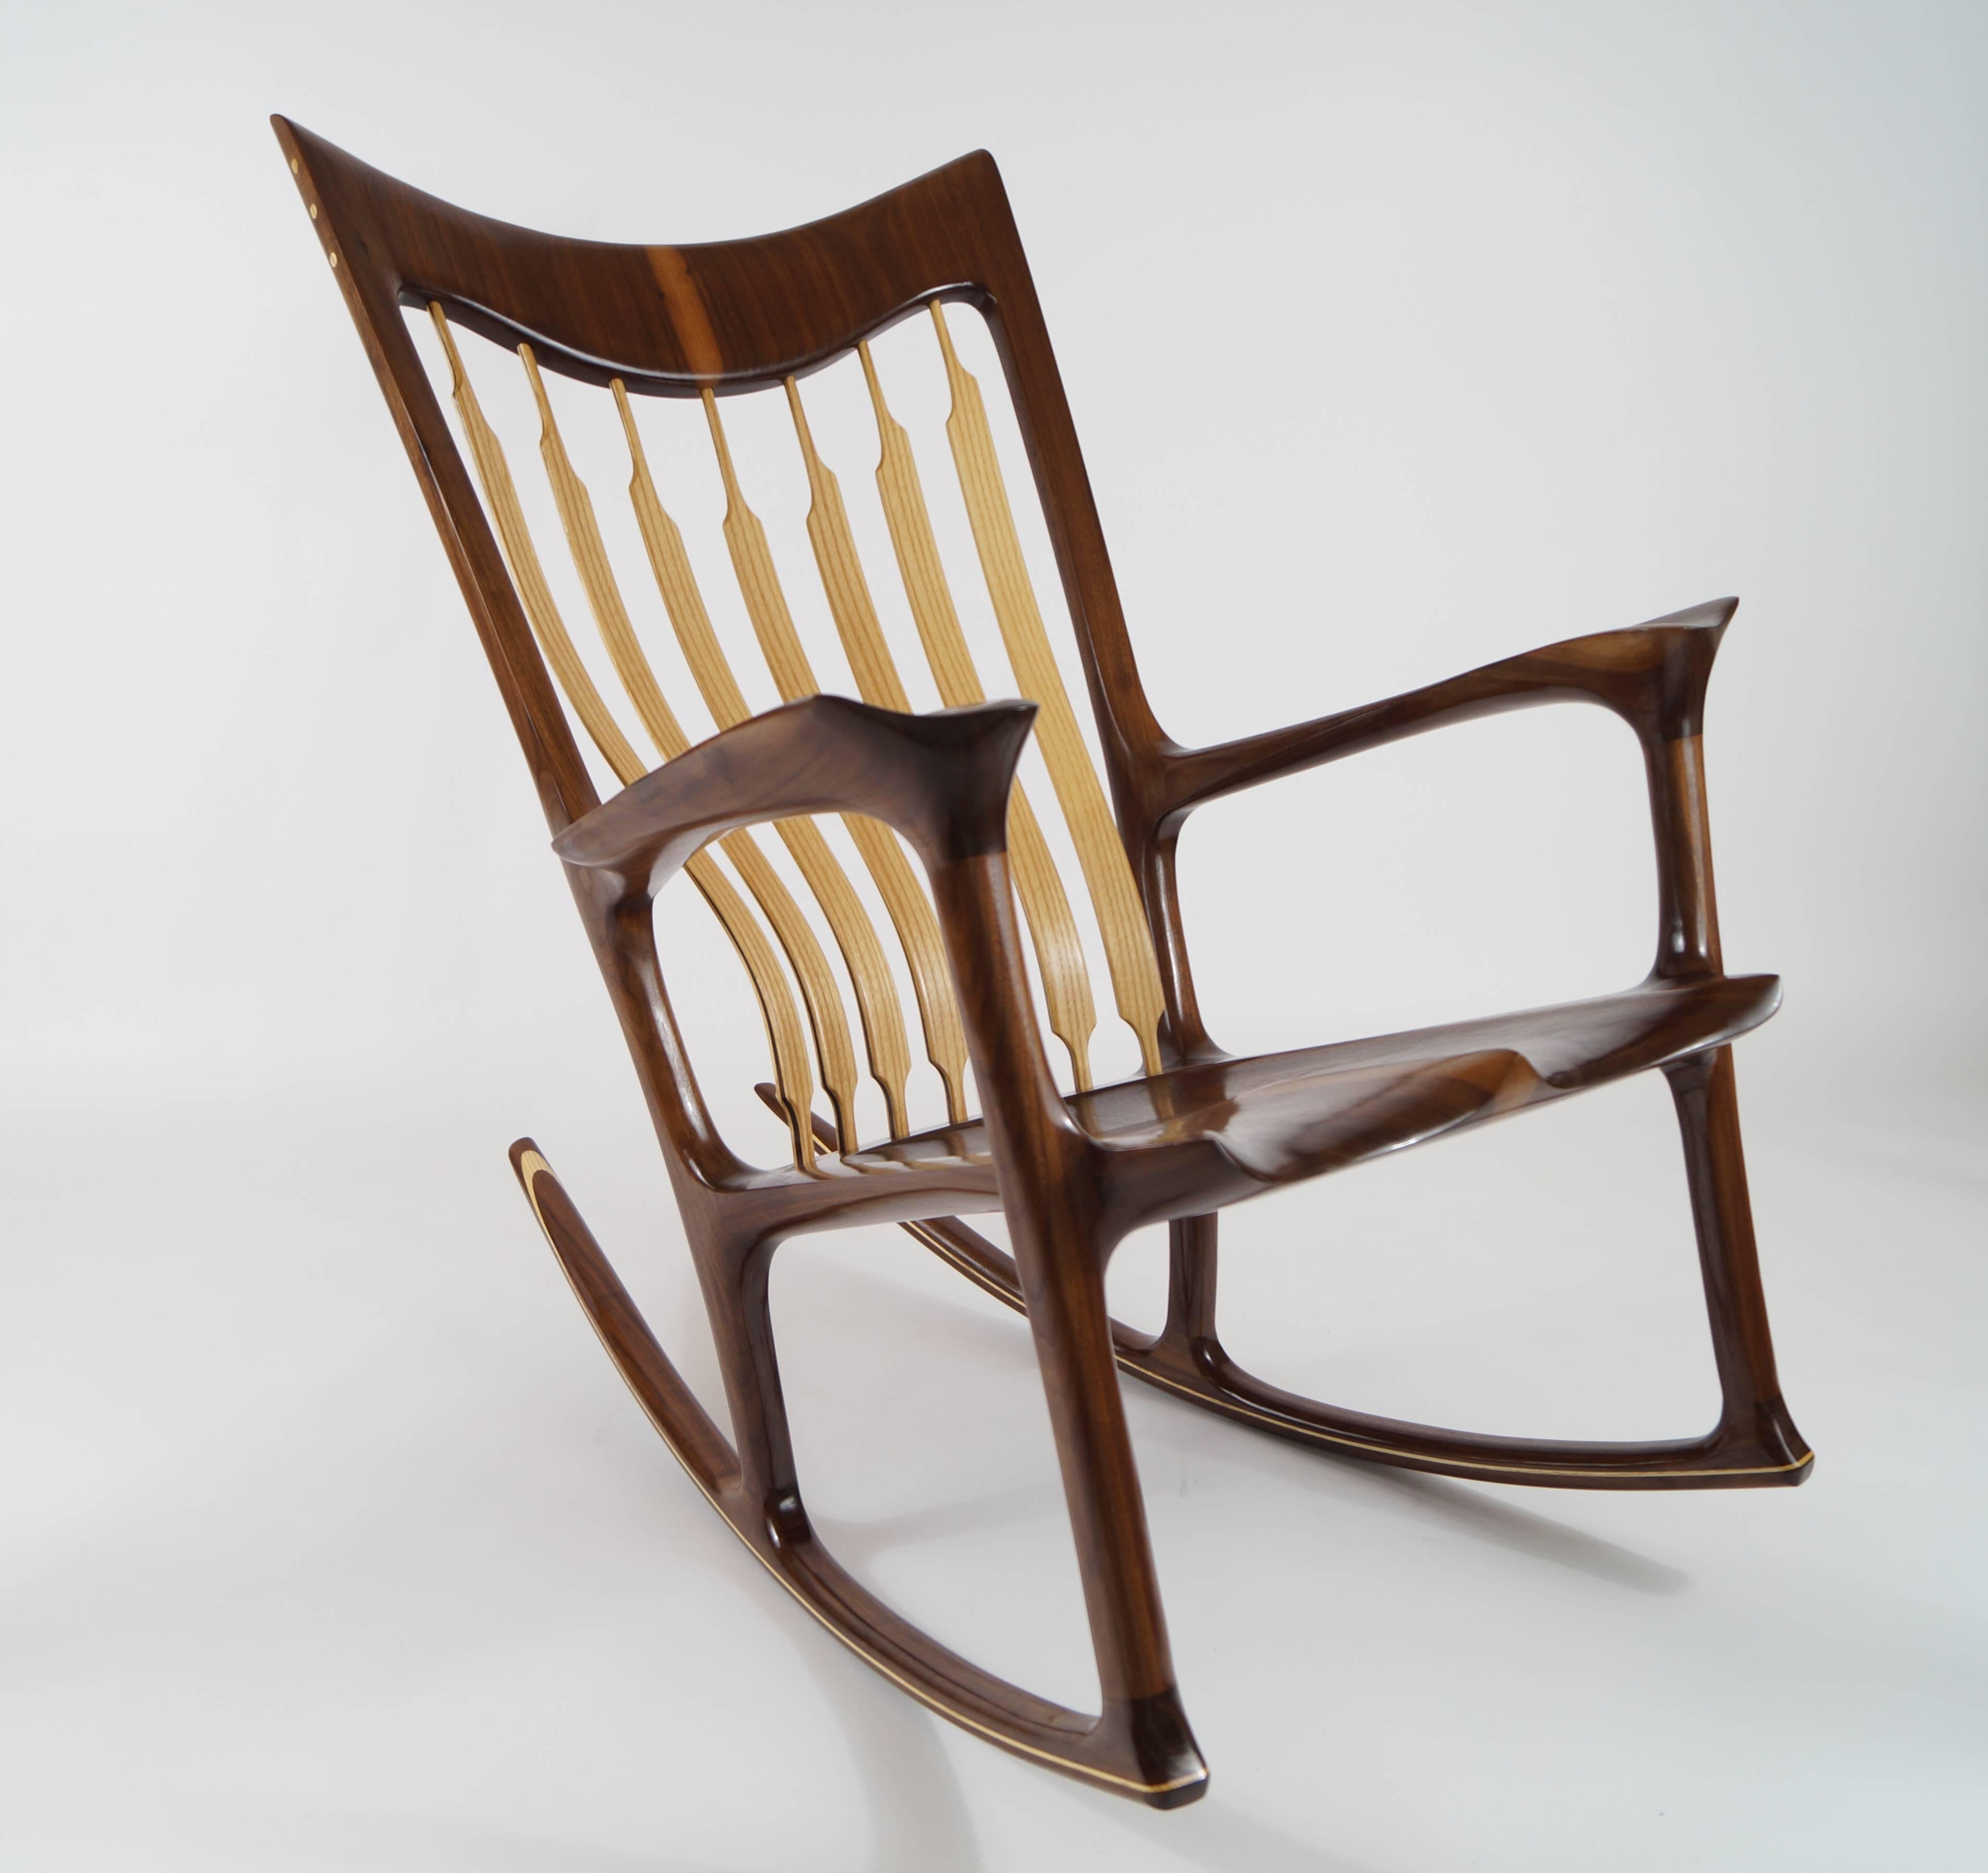 Walnut Rocking Chair, Handcrafted and Designed by Morten Stenbaek